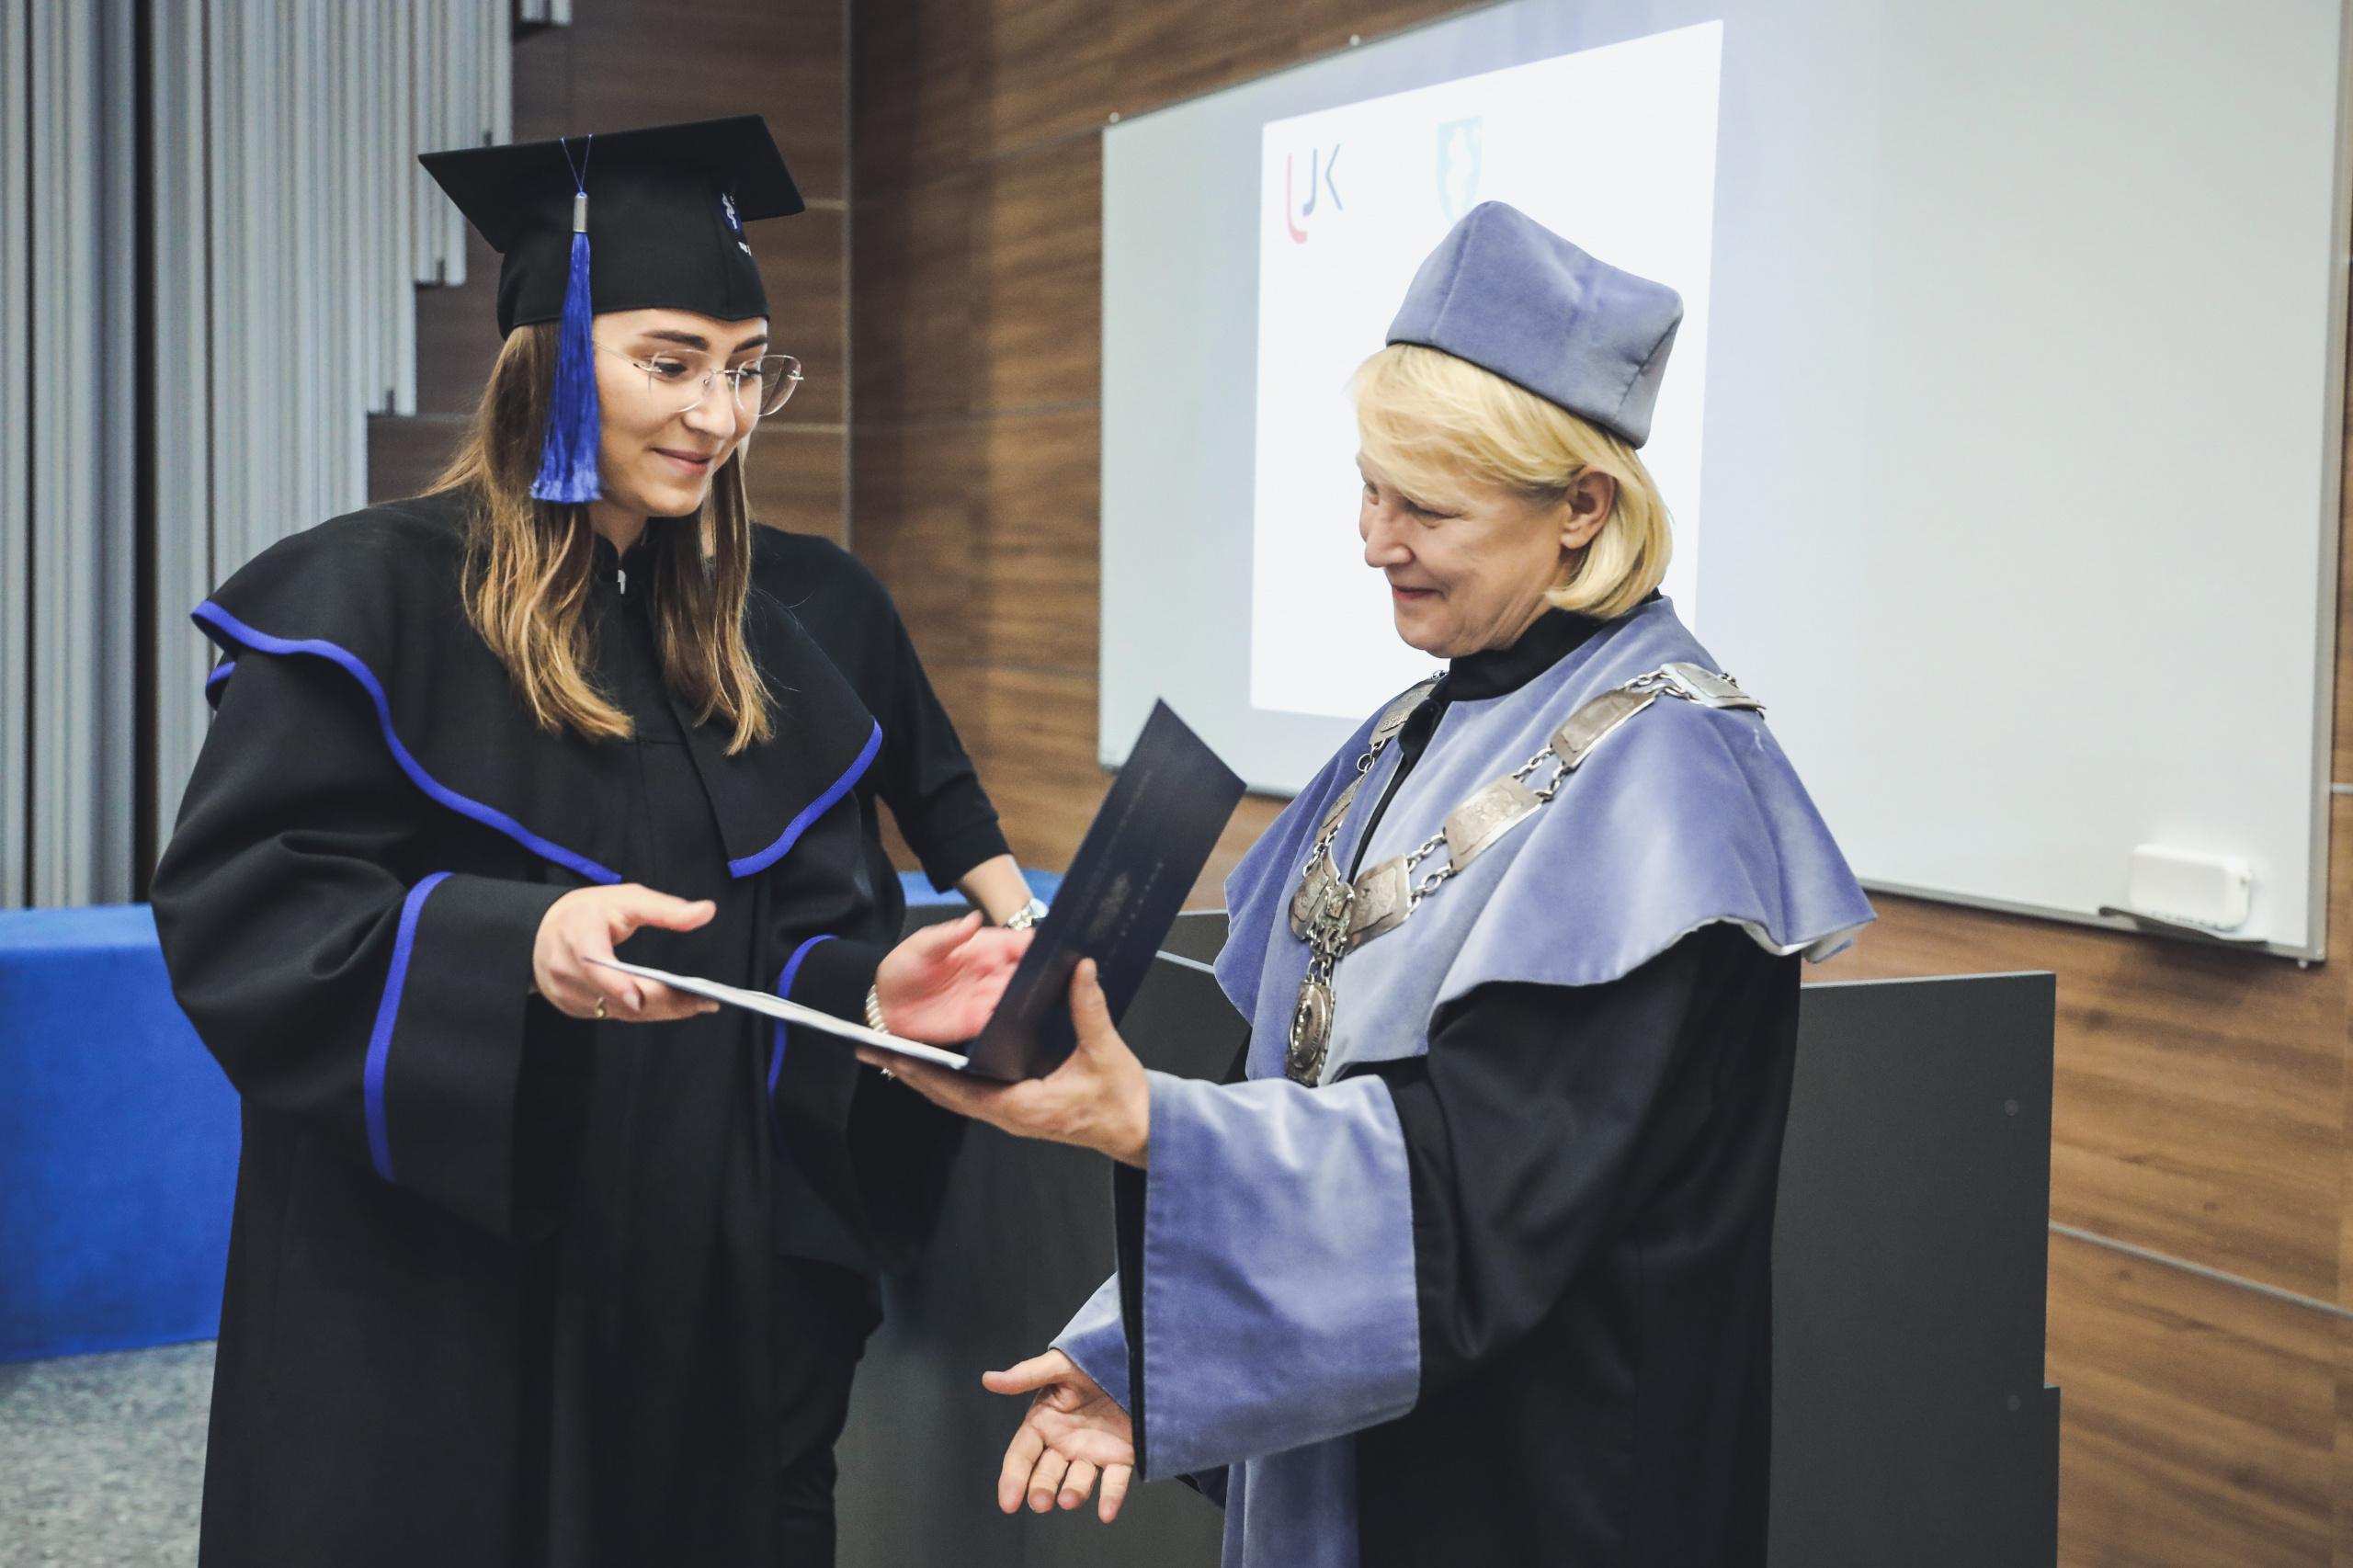 Absolwentka odbiera dyplom i gratulacje od dziekan Collegium Medicum prof. dr hab. Marianny Janion.